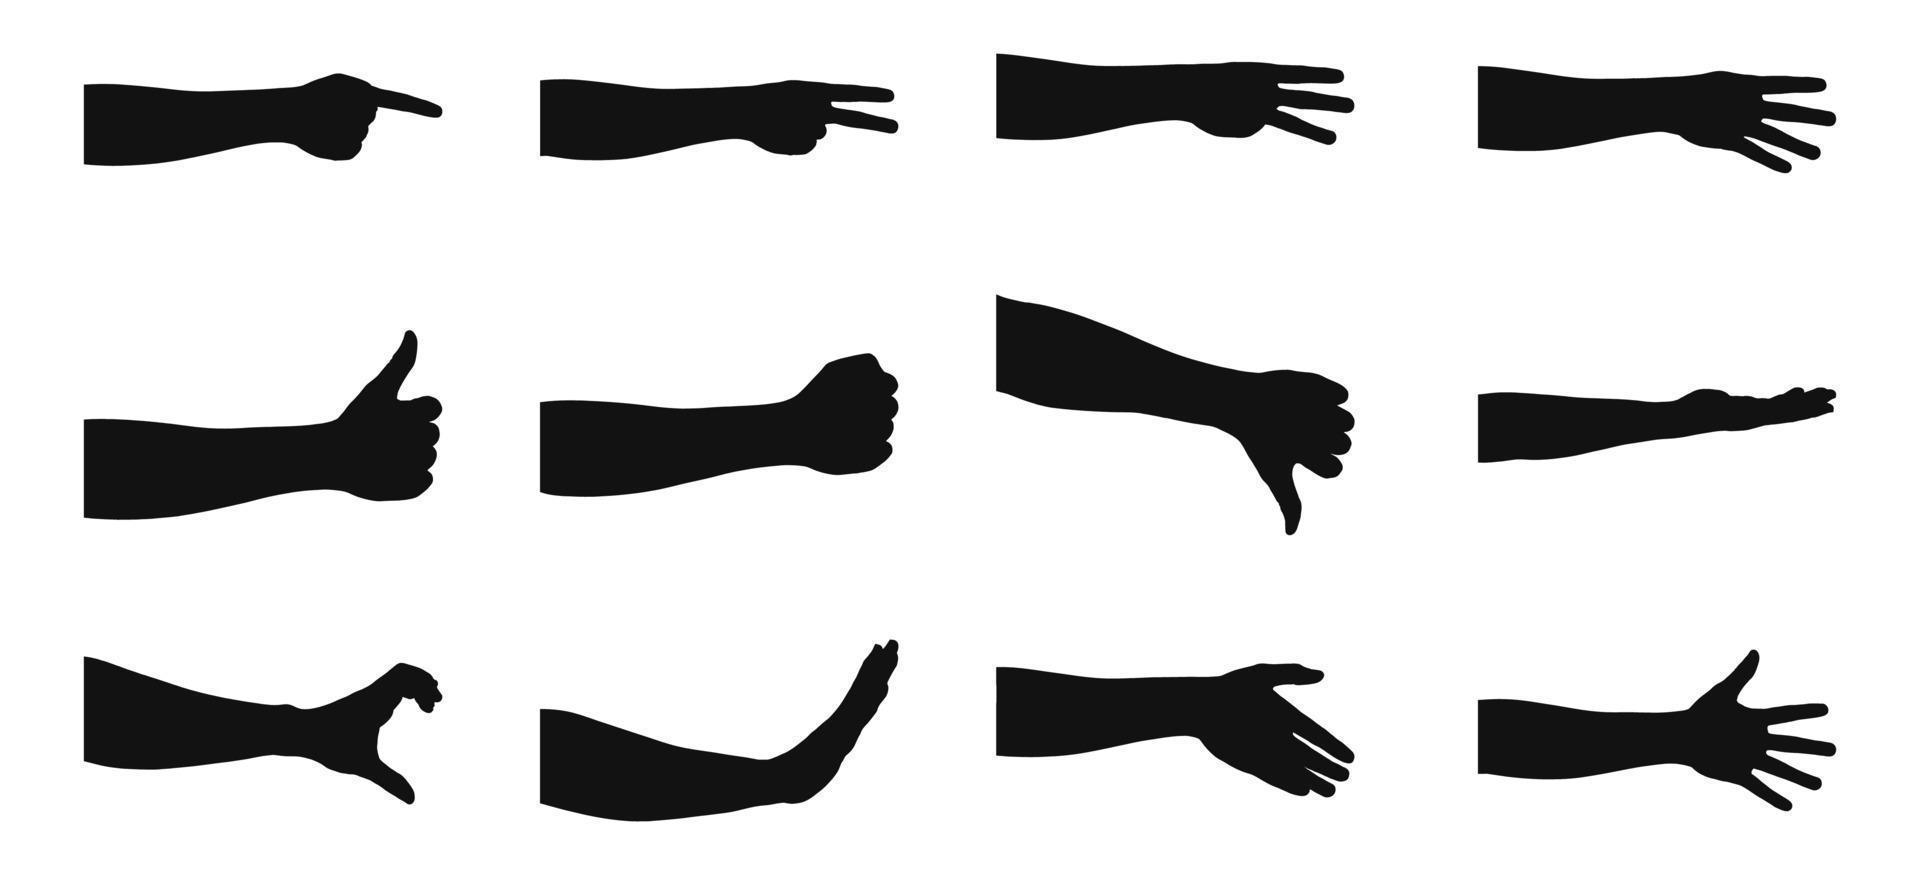 vektor illustration av samling av hand gester silhuetter isolerat på vit bakgrund